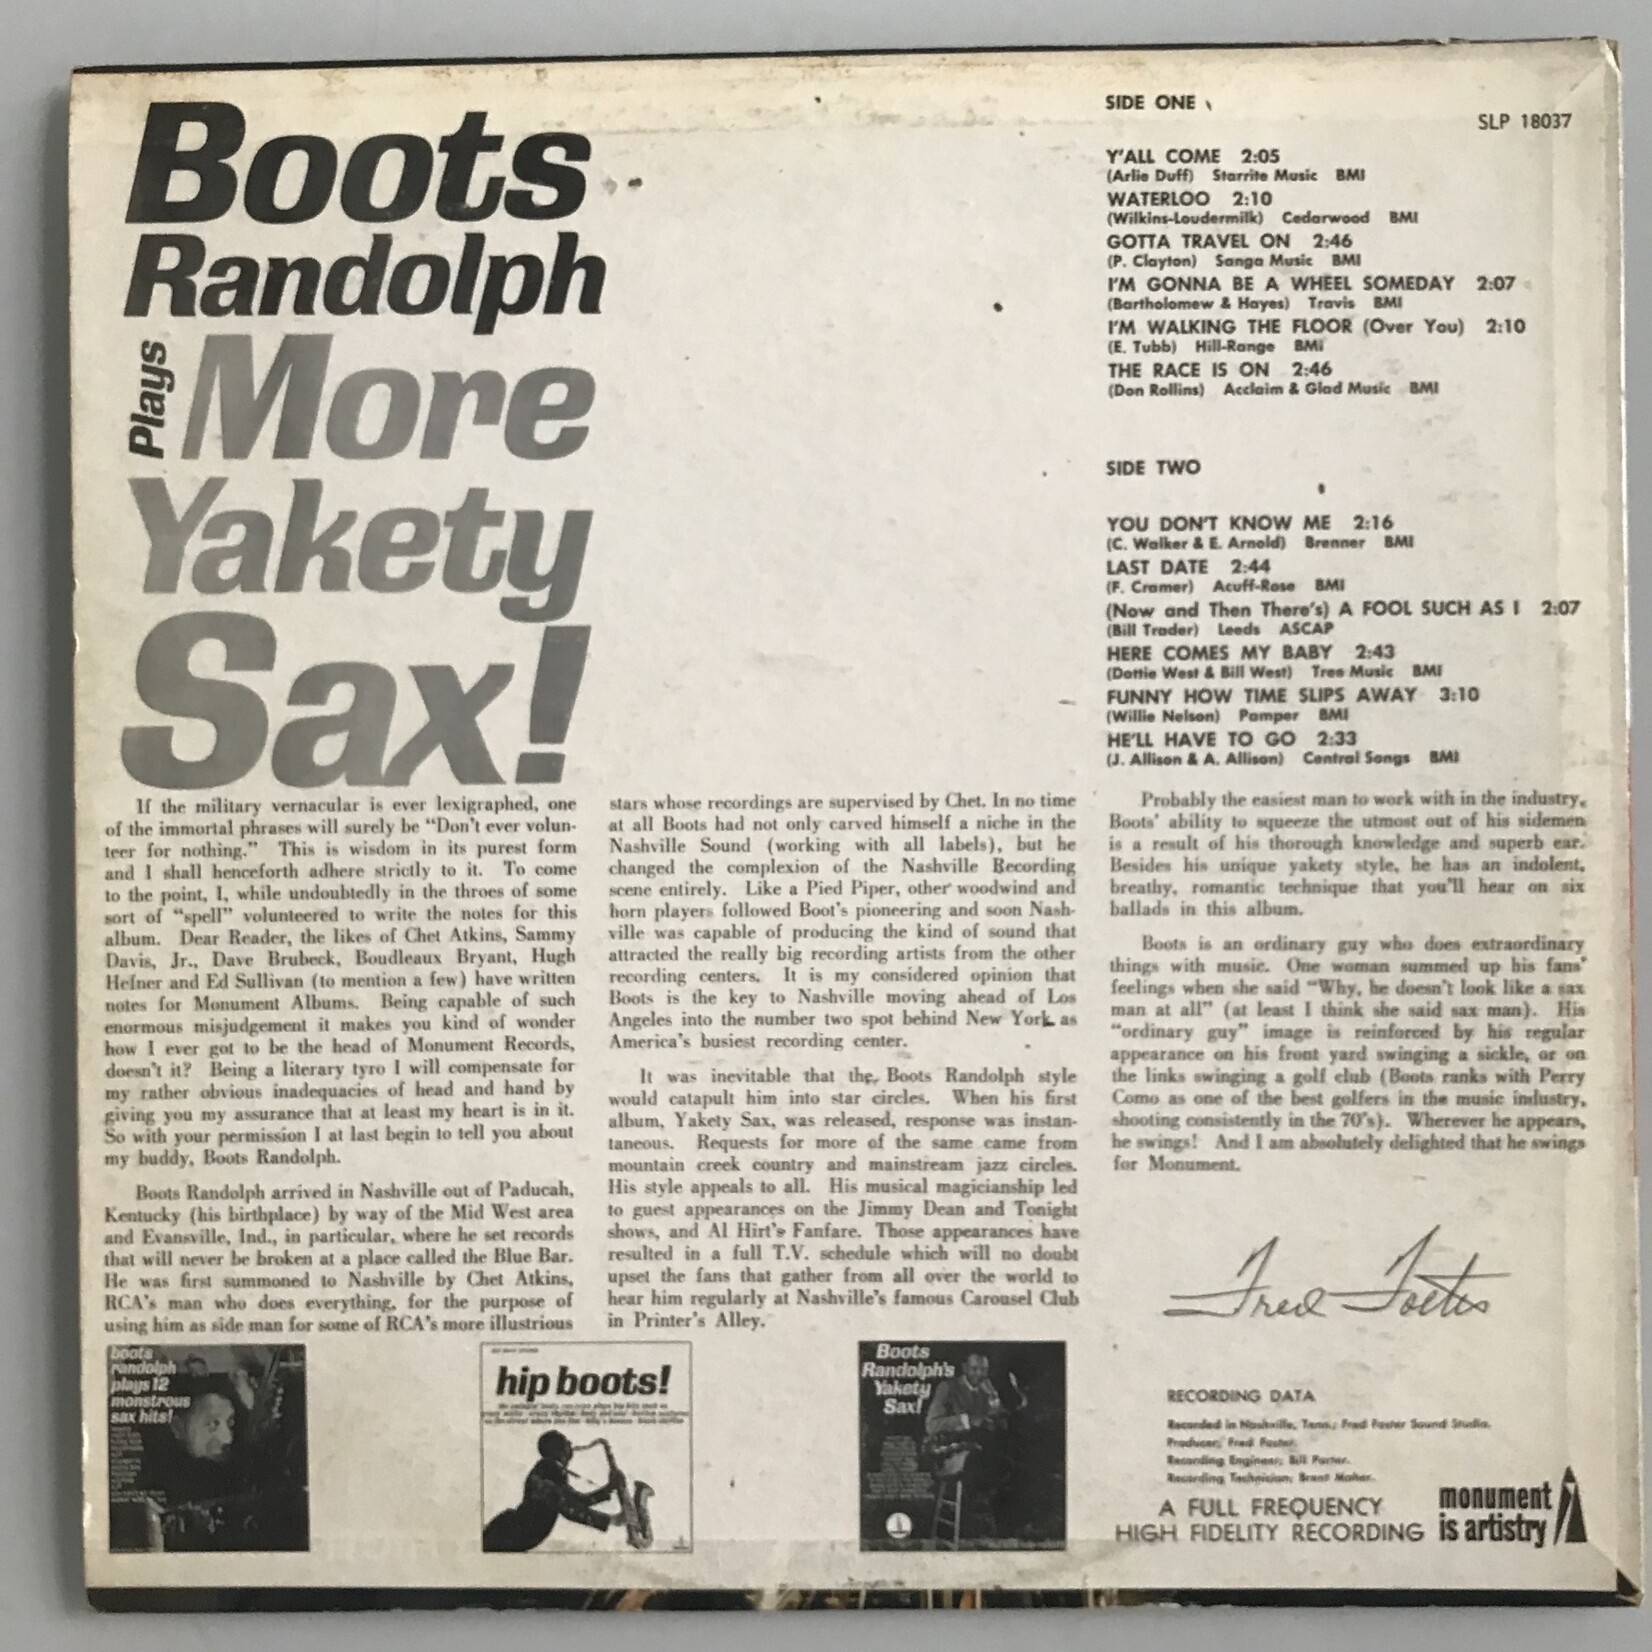 Boots Randolph - Plays More Yakety Sax - Vinyl LP (USED)